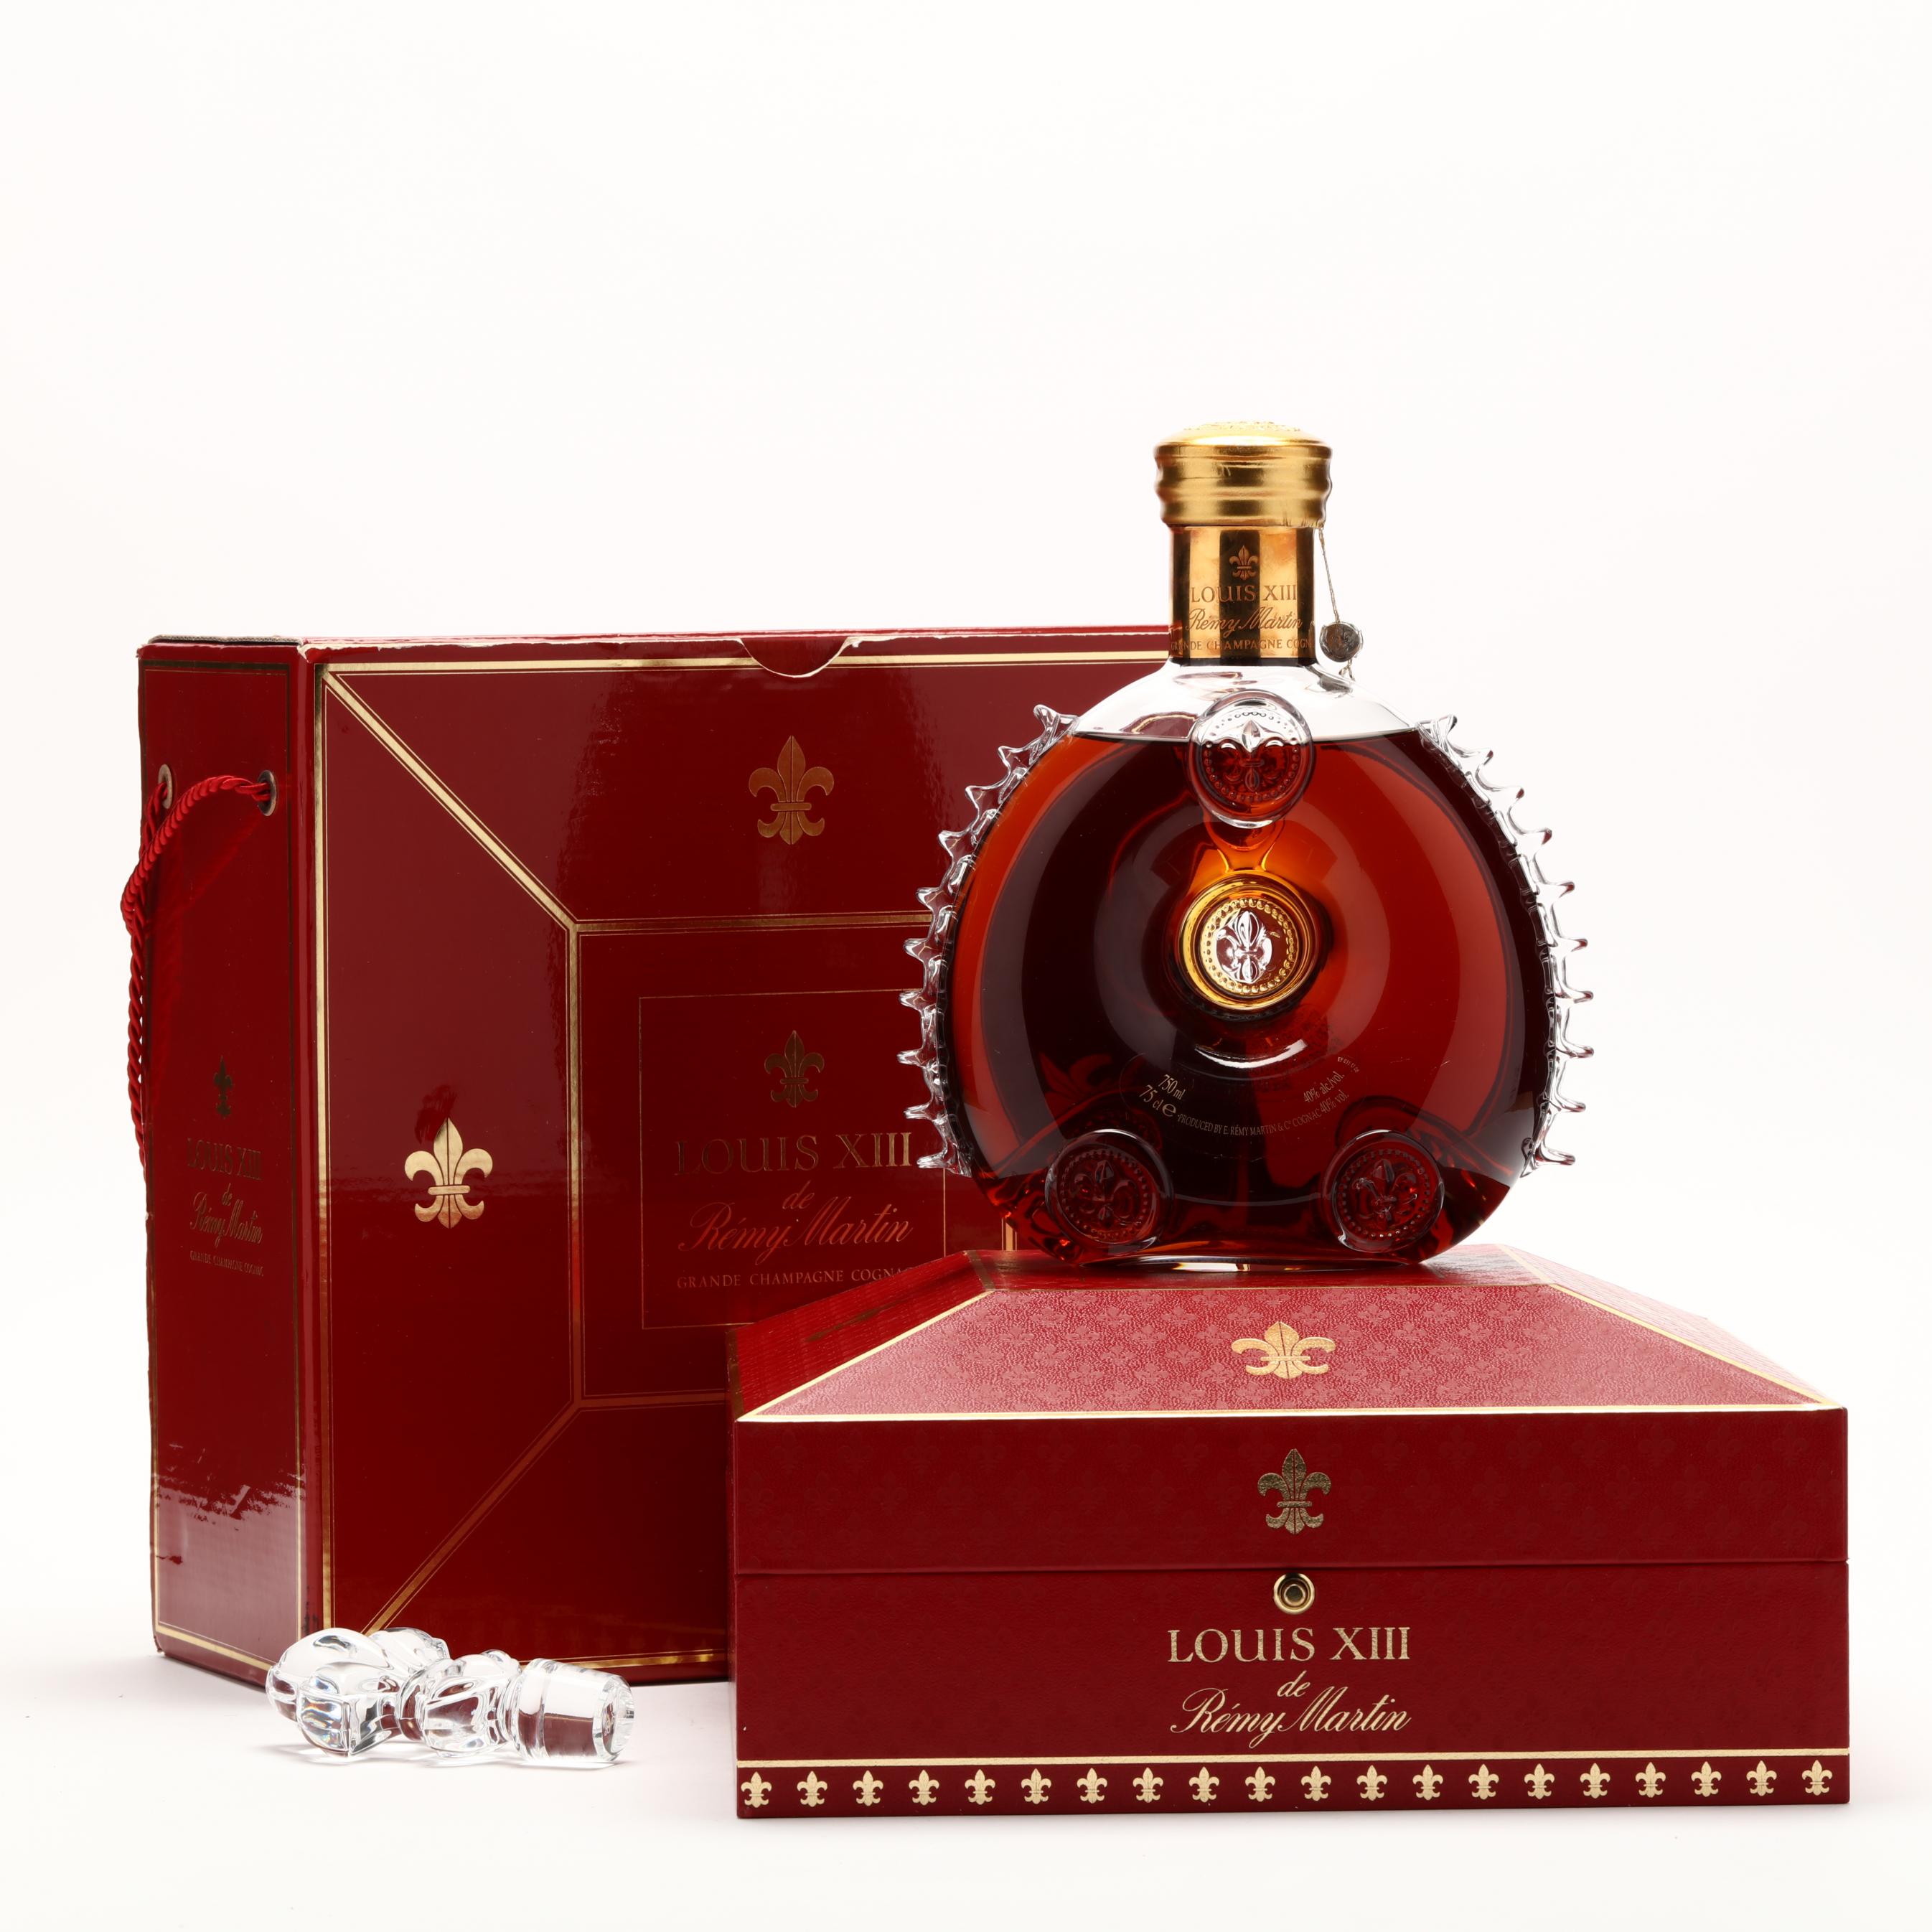 Louis XIII de Remy Martin - Grande Champagne Cognac (750ml)